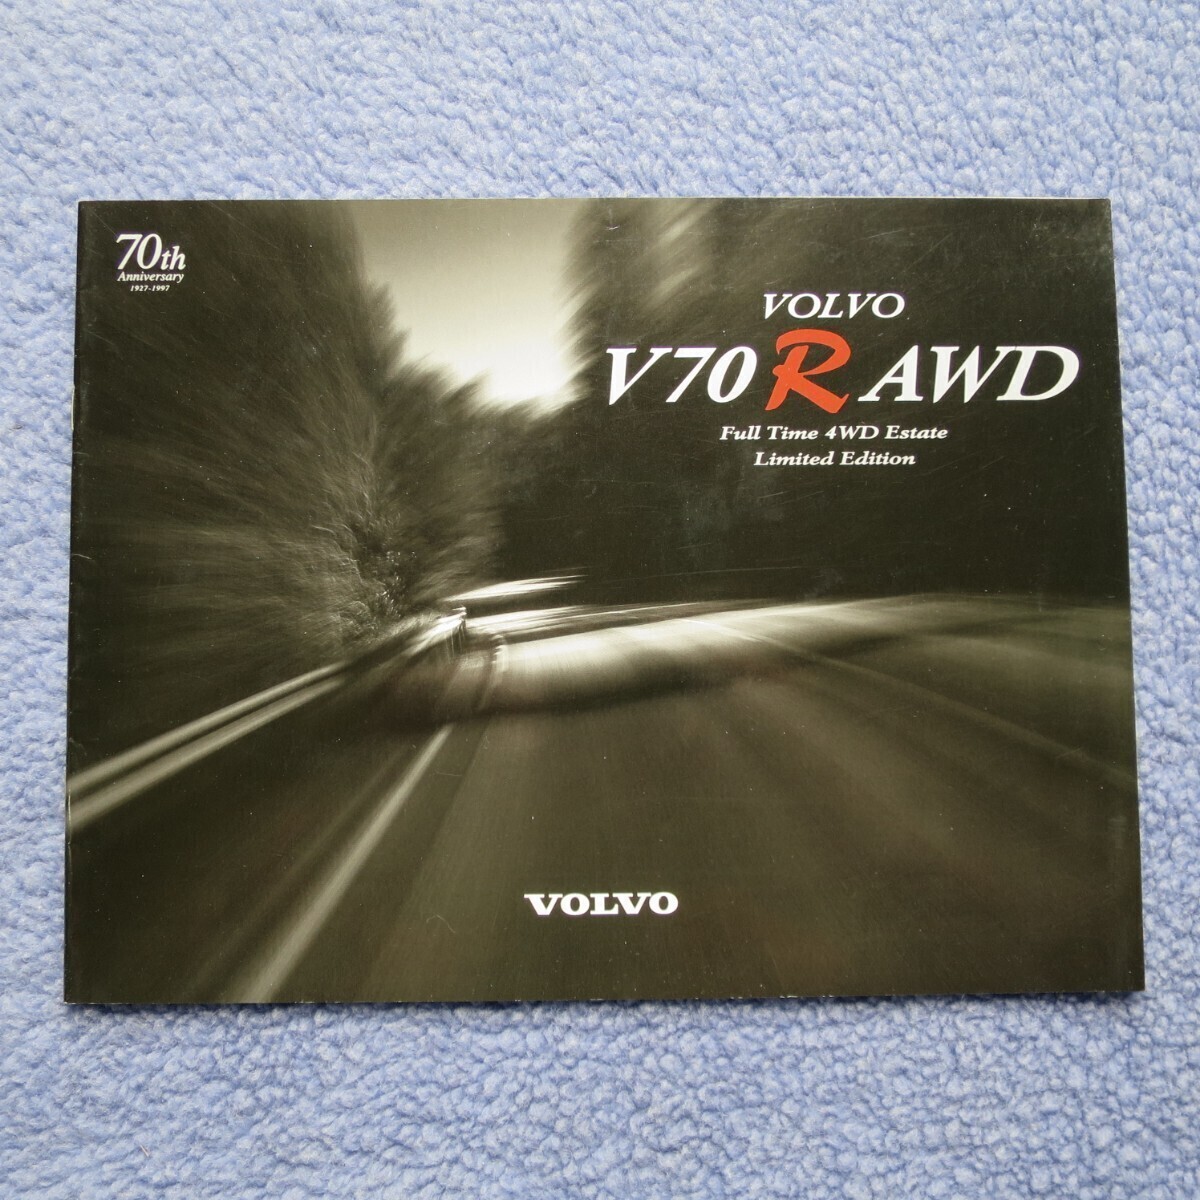 VOLVO V70R AWD catalog Volvo 70 anniversary commemoration model 